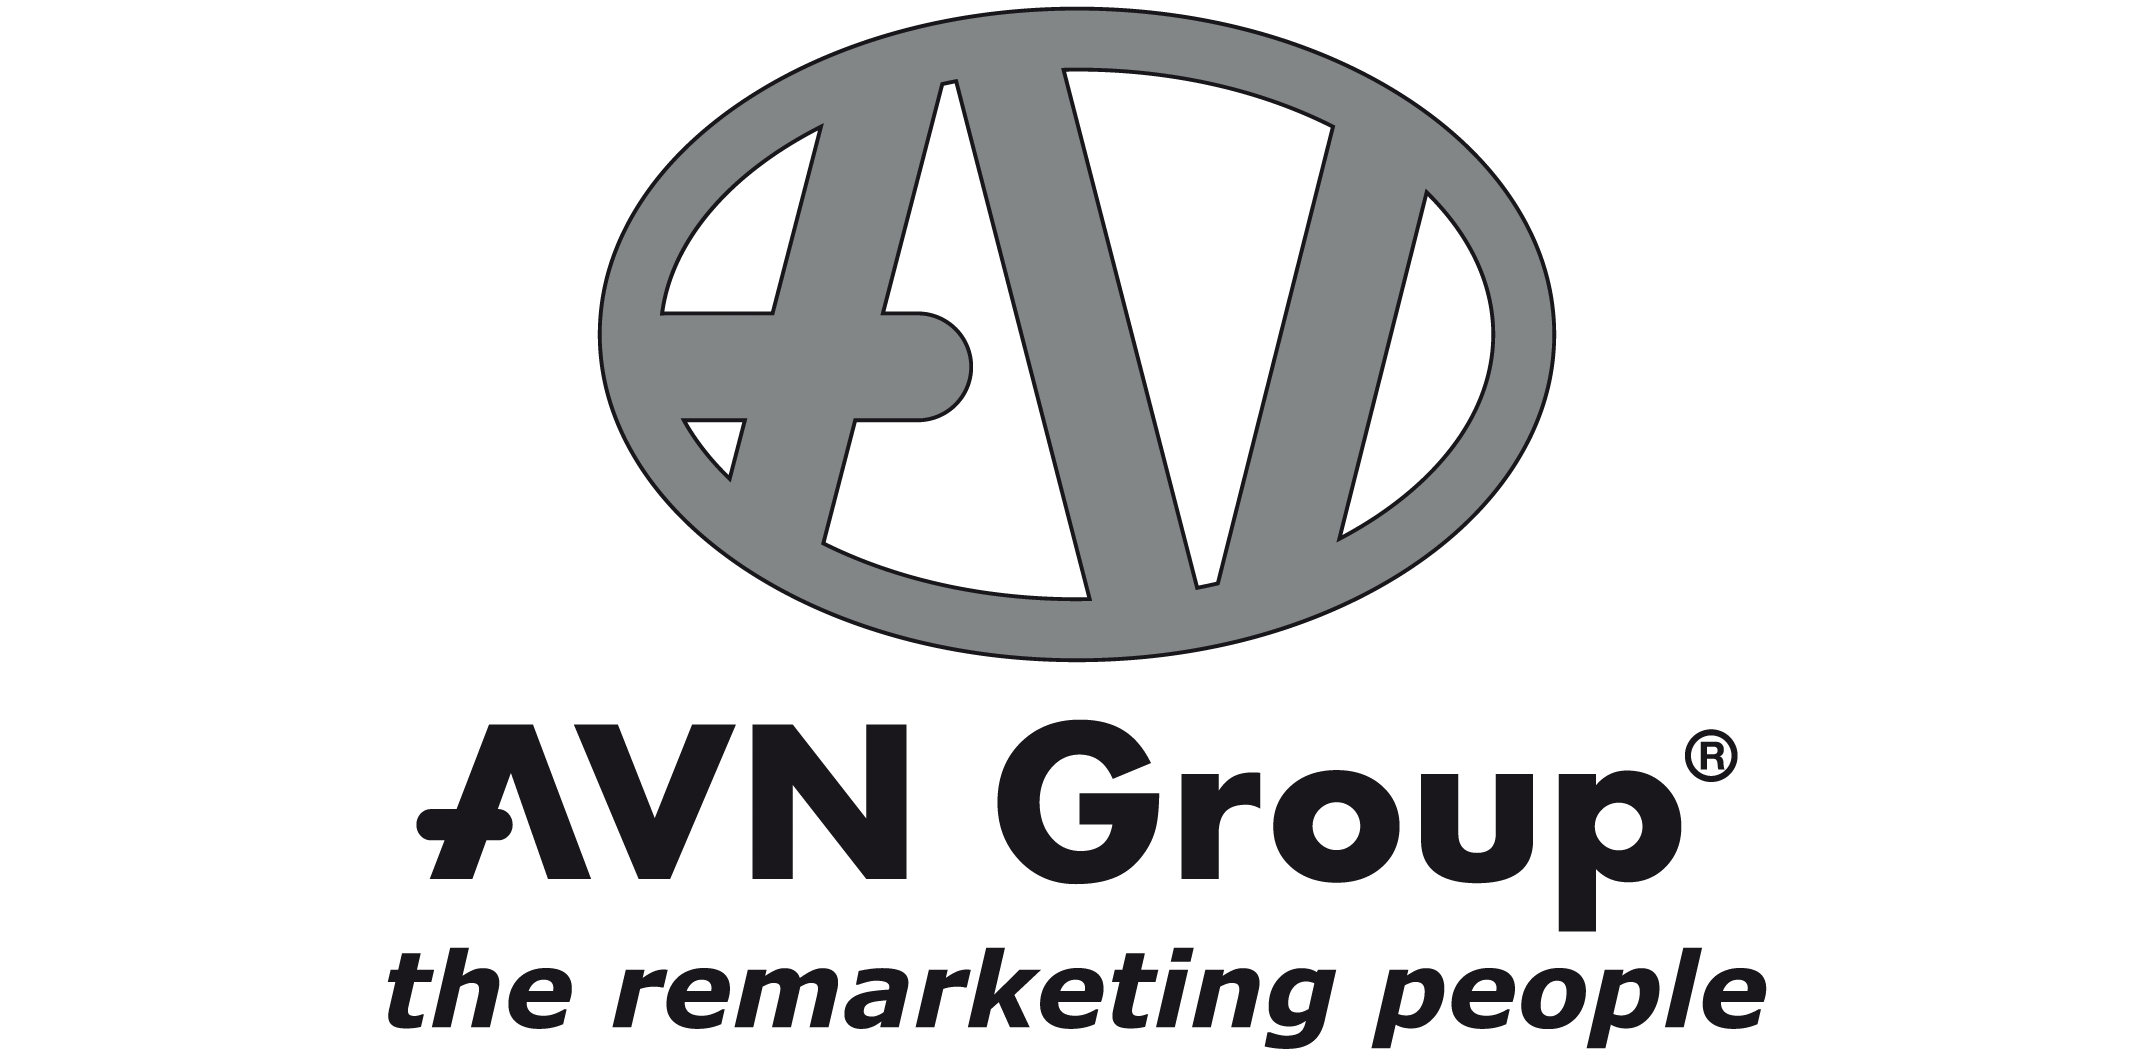 PNG - AVN Group